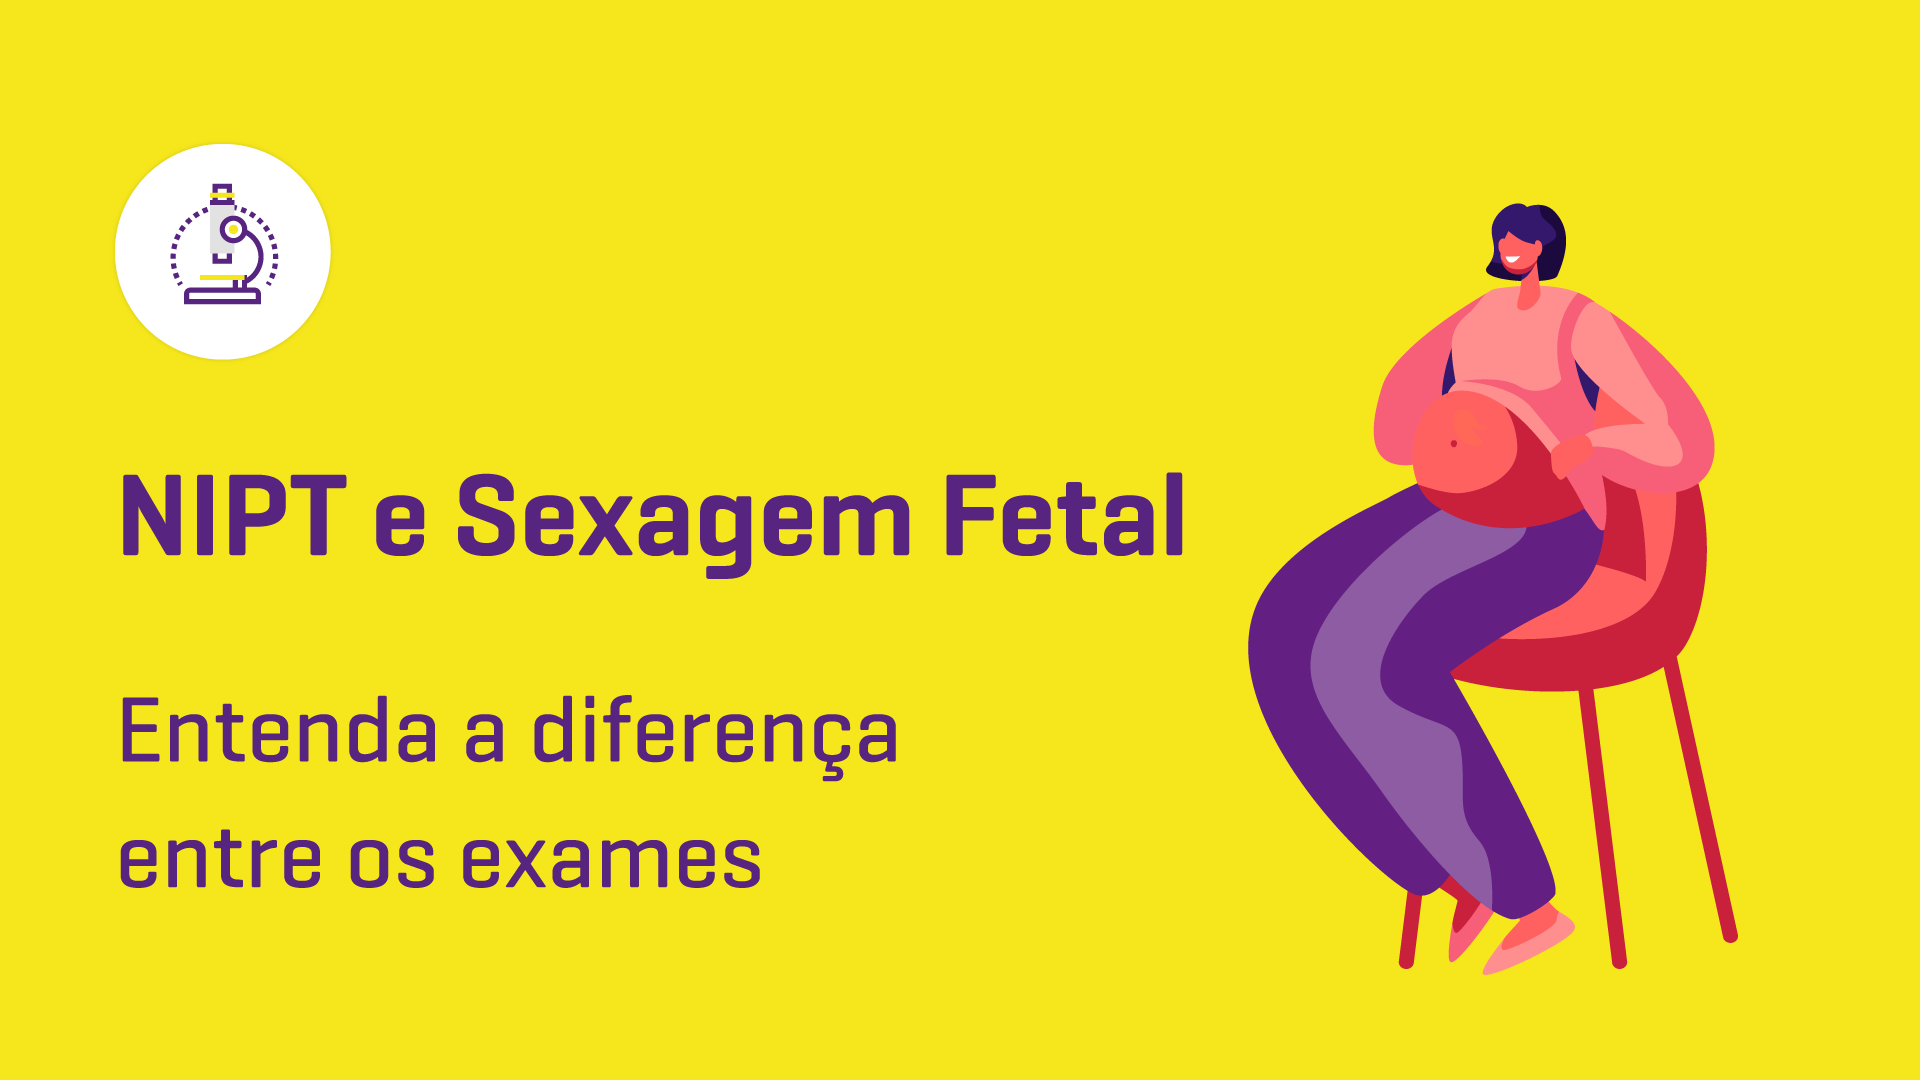 Qual a diferença entre a sexagem fetal e o NIPT?